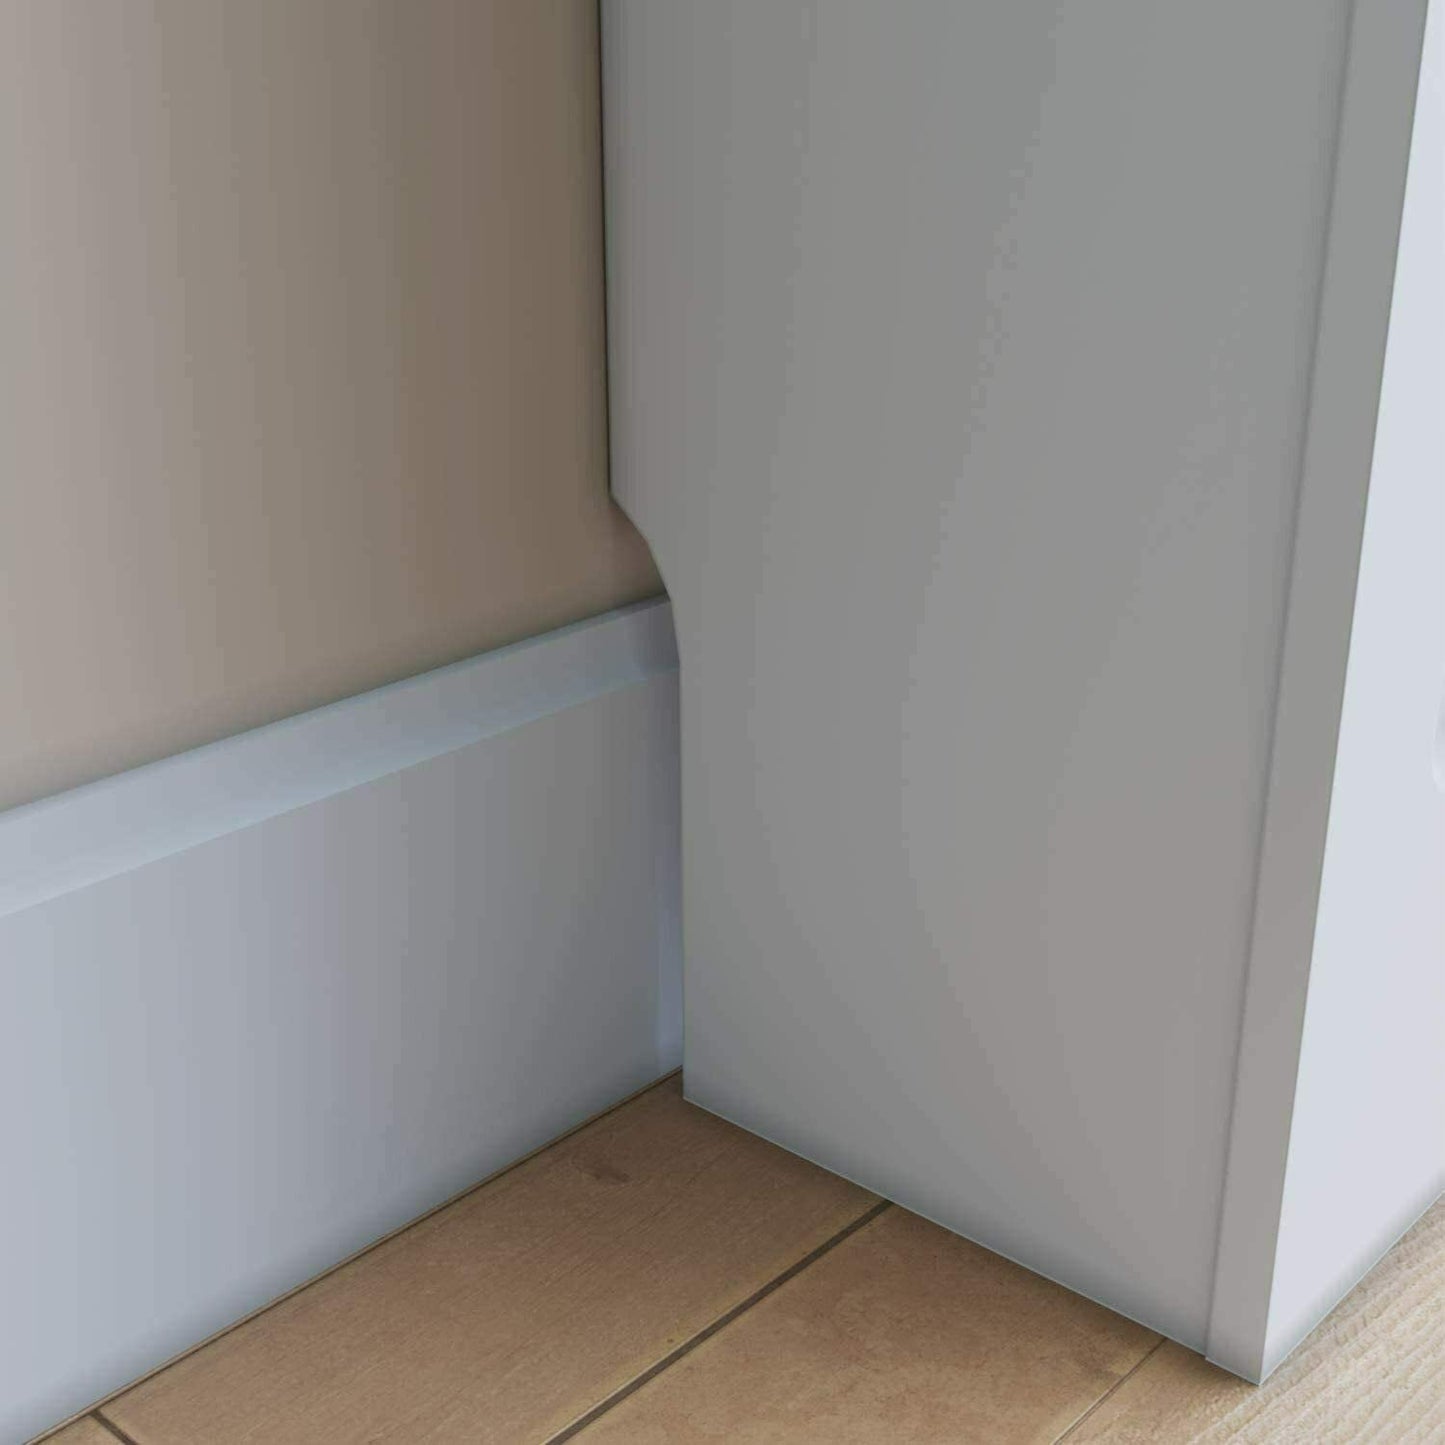 HYGRAD BUILT TO SURVIVE White Wooden Horizontal Slanted Radiator Cover Grill Cabinet Panel Shelf Hallway Furniture Medium 111.5 x 19 x 81.5 cms